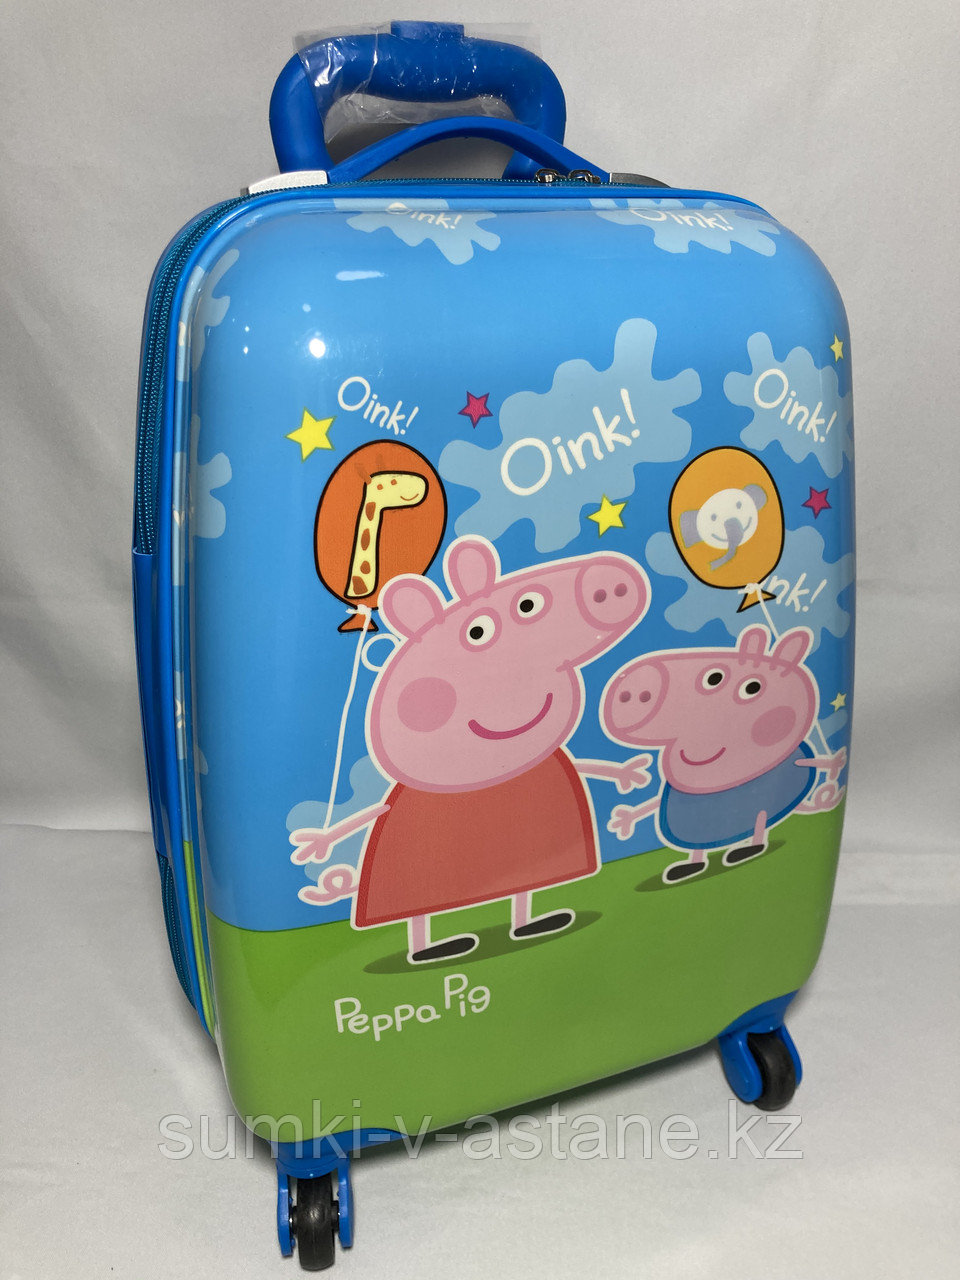 Детский чемодан из пластика на 4-х колёсах, 6-9 лет. Высота 46 см, ширина 31 см, глубина 21 см.